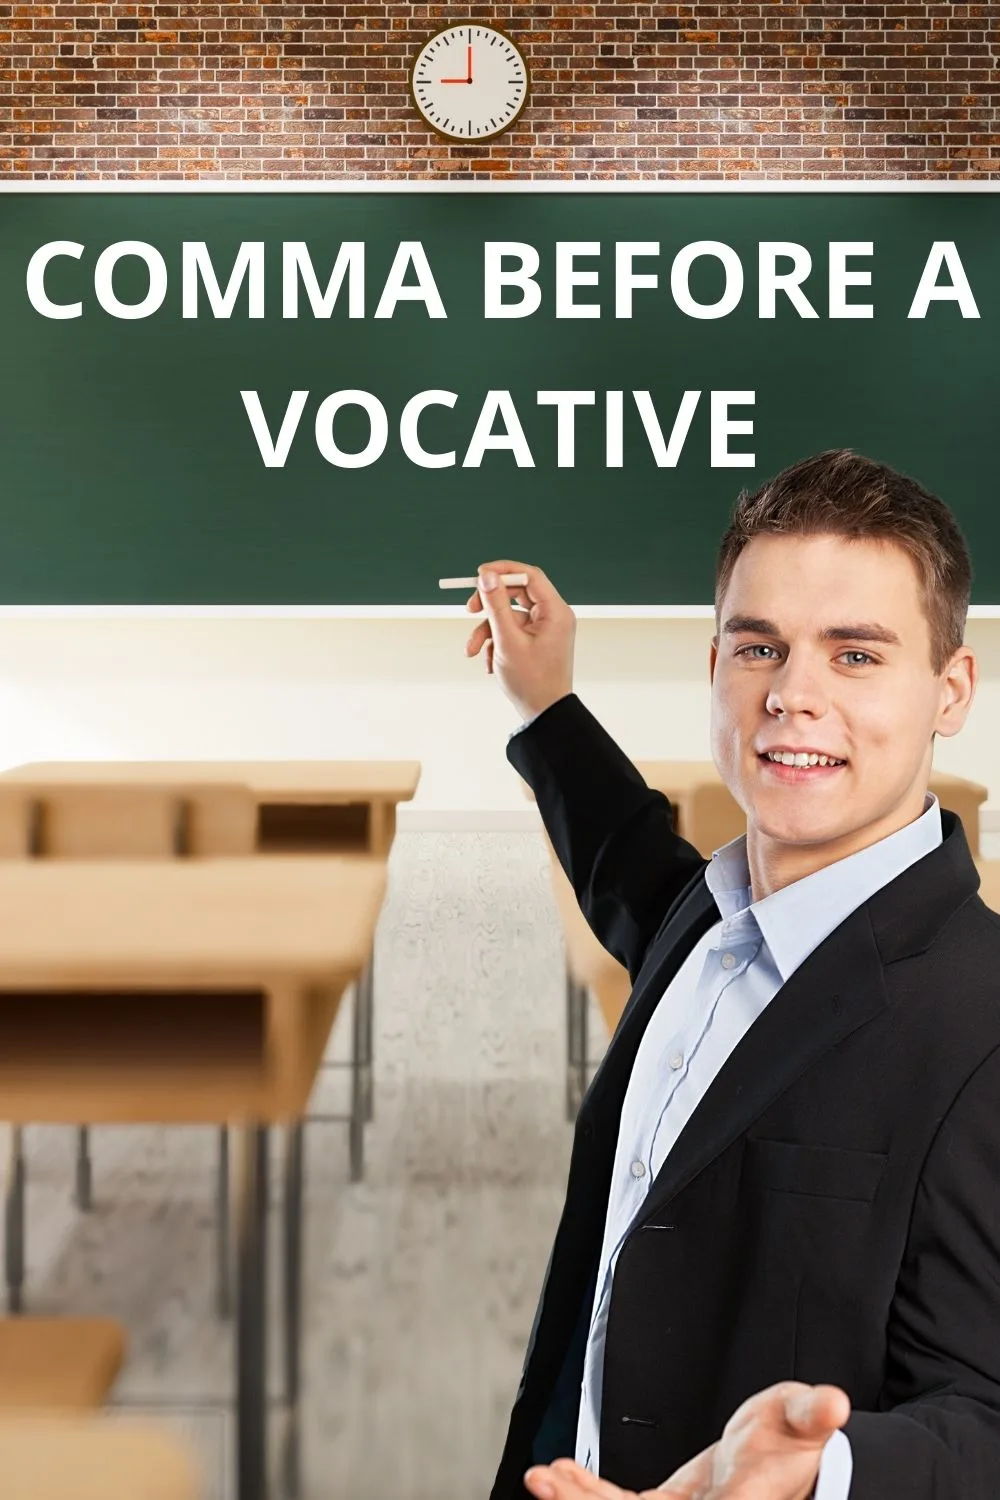 Comma Before a Vocative